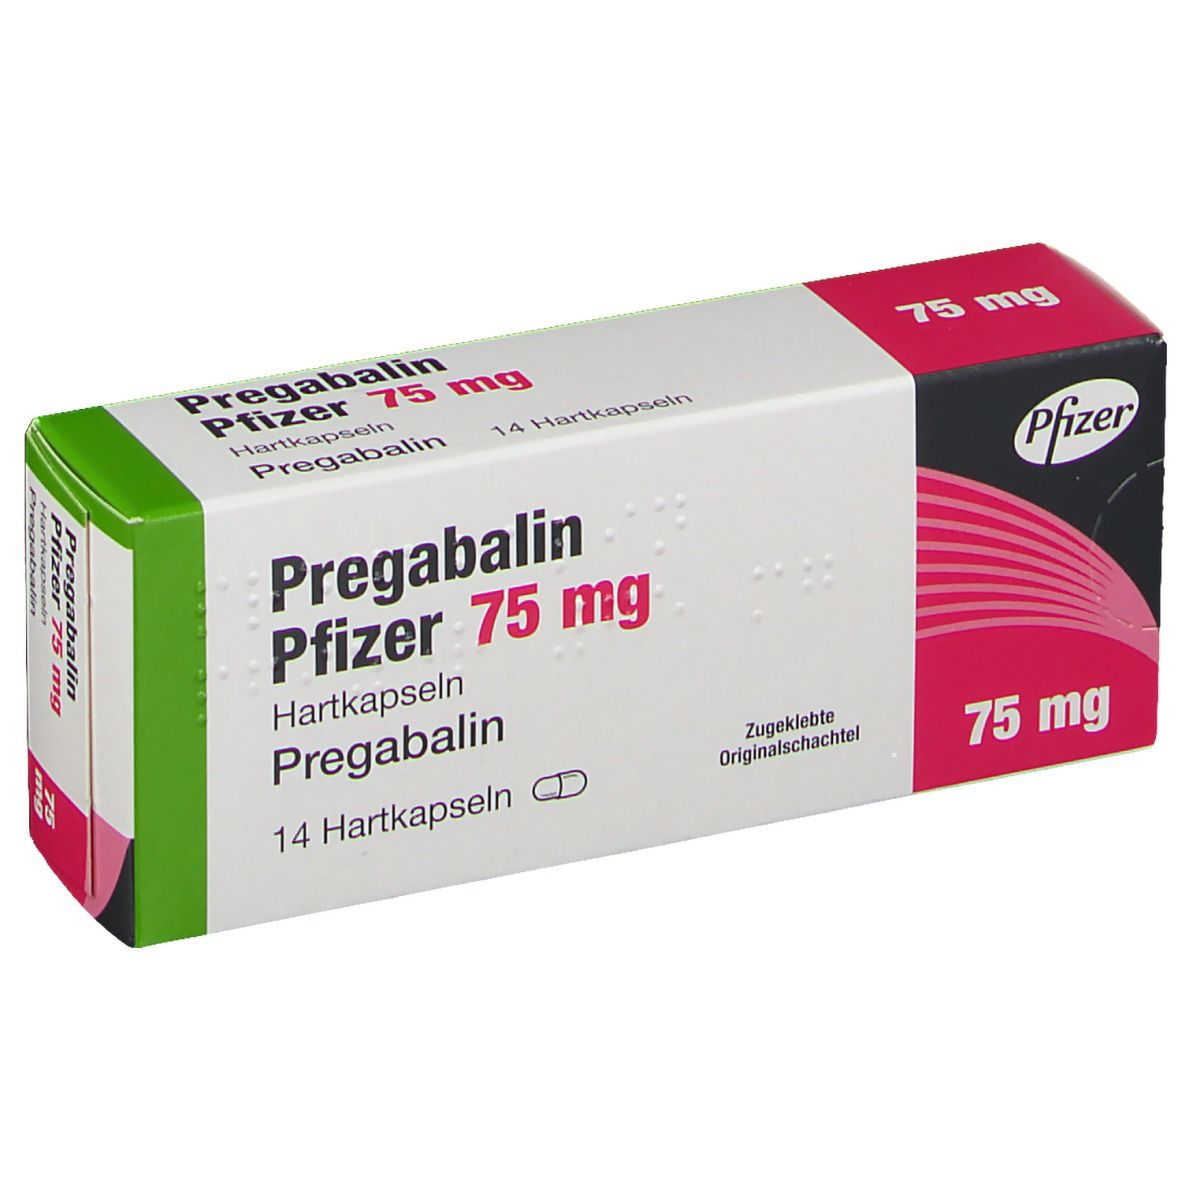 Pregabalin Pfizer 75 mg